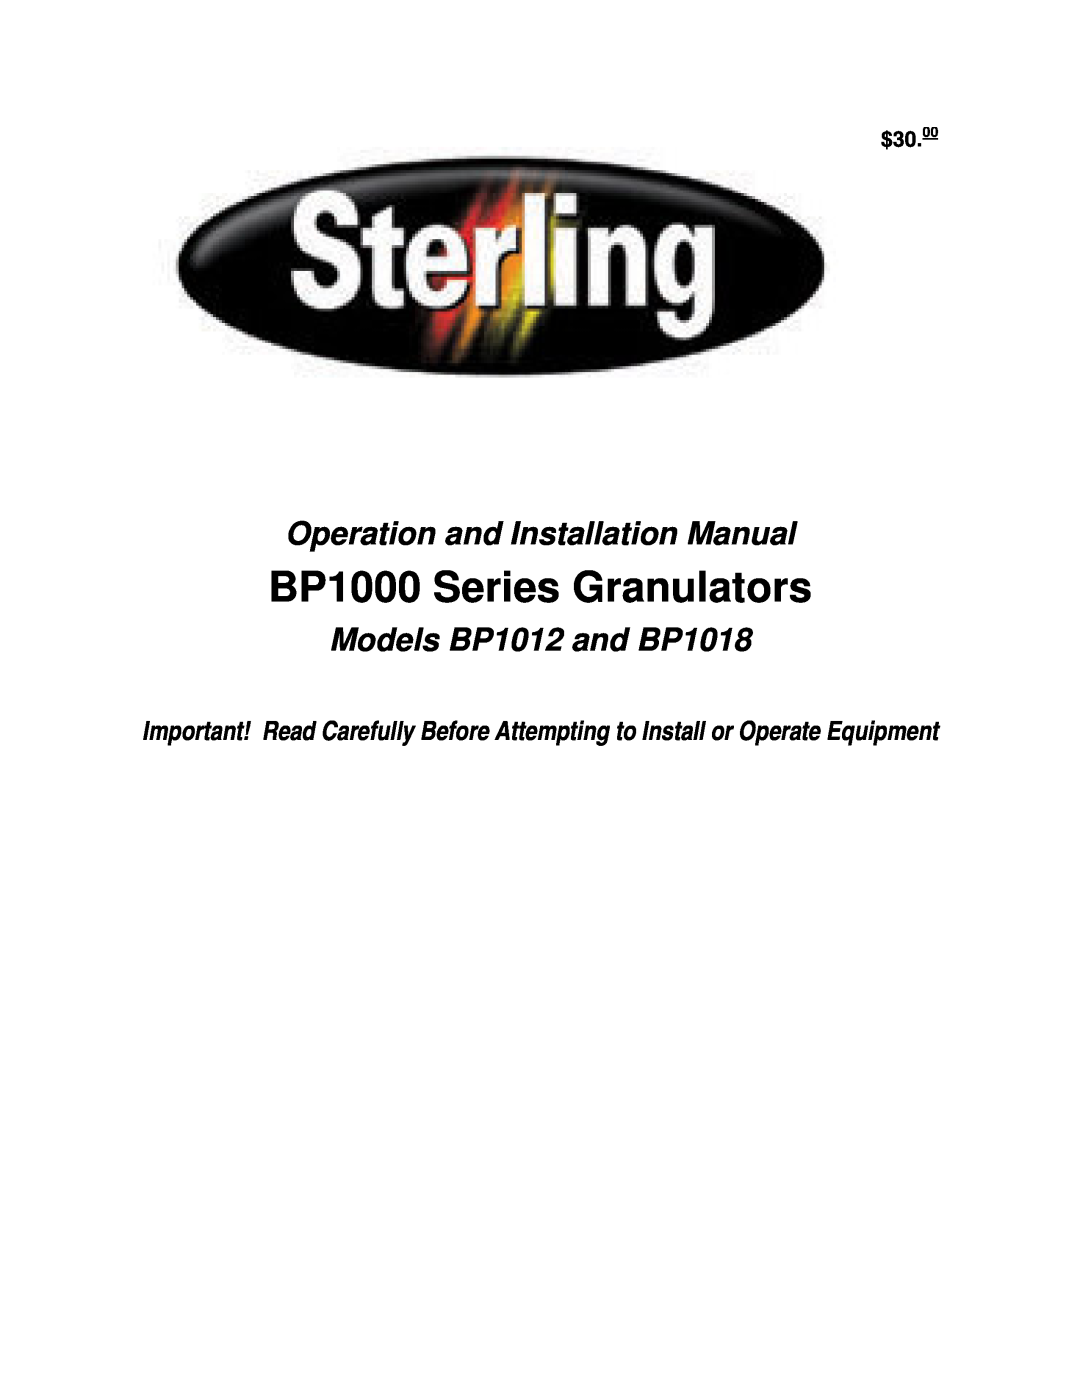 Sterling installation manual BP1000 Series Granulators, Operation and Installation Manual, Models BP1012 and BP1018 